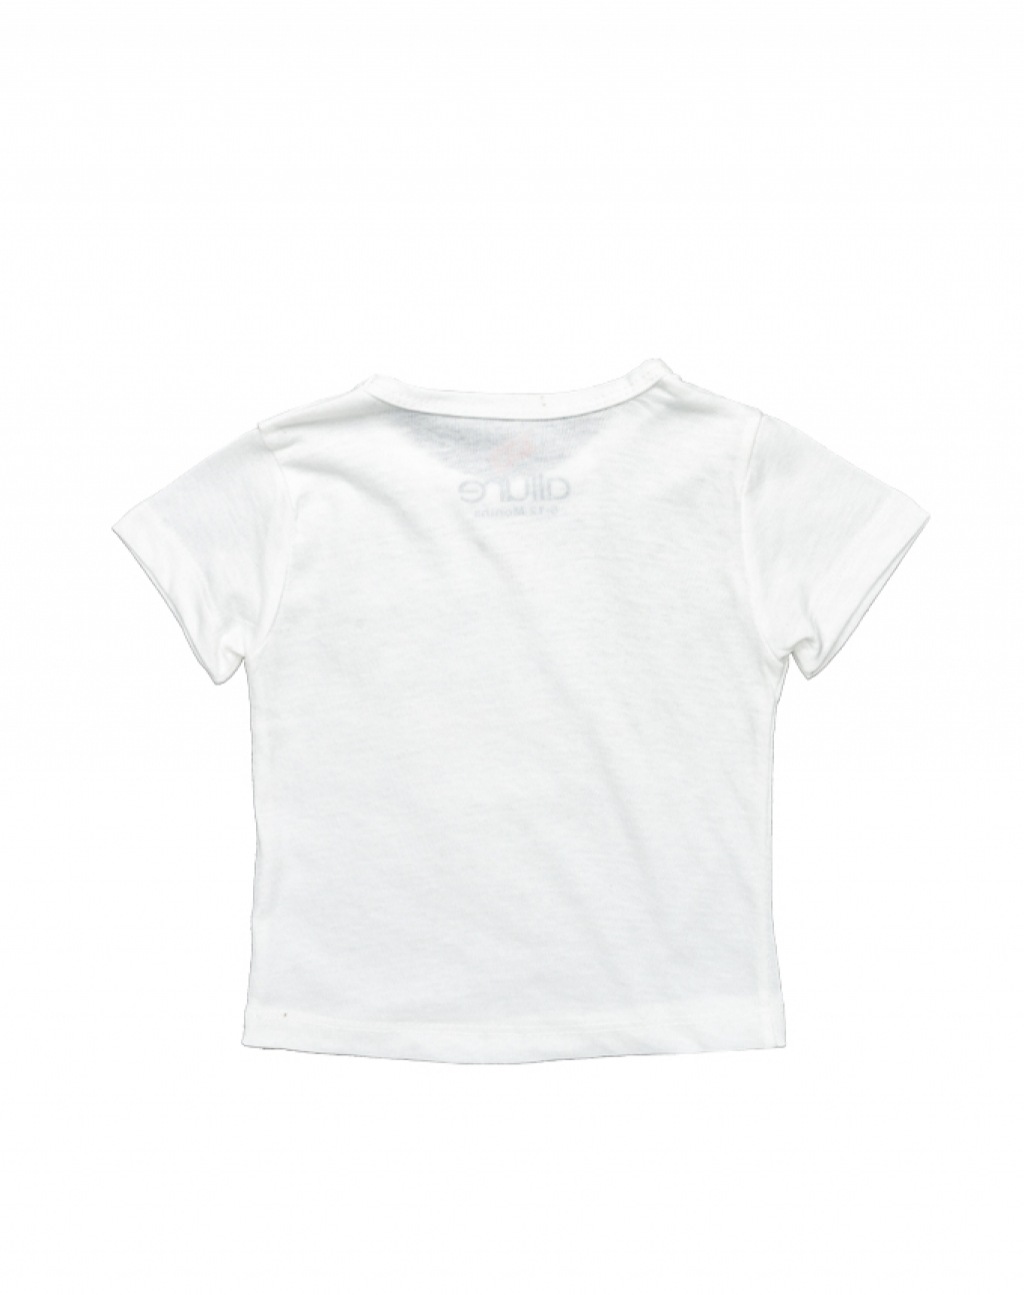 Buy AllureP T-shirt H-S White Mom + Dad in Pakistan | online shopping ...